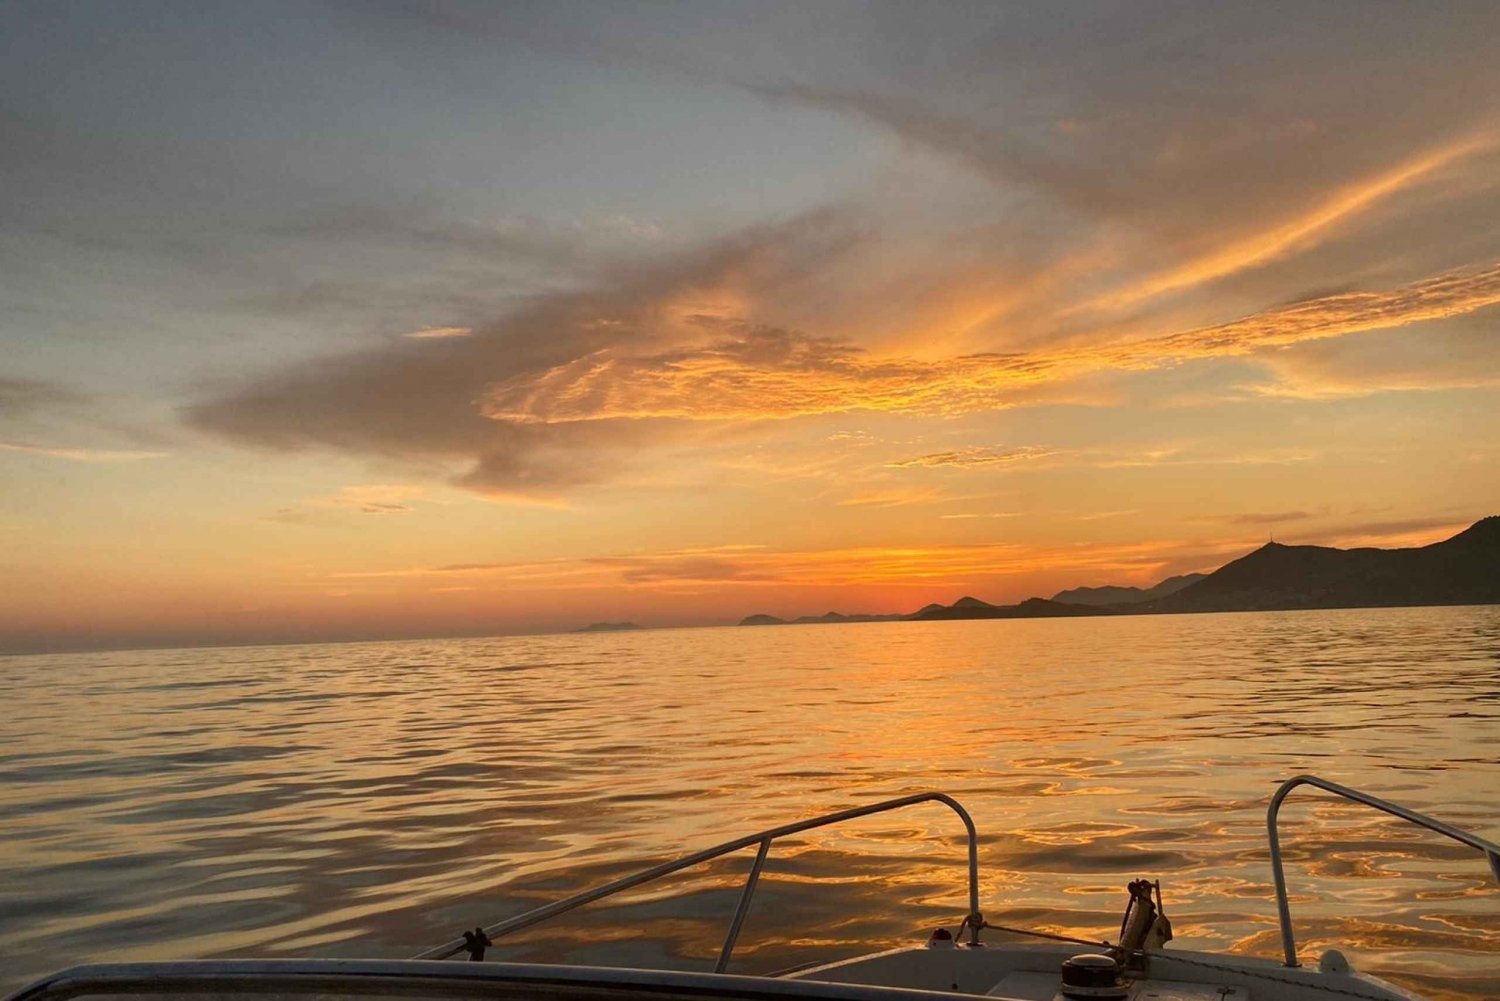 Dubrovnik: cruzeiro romântico ao pôr do sol